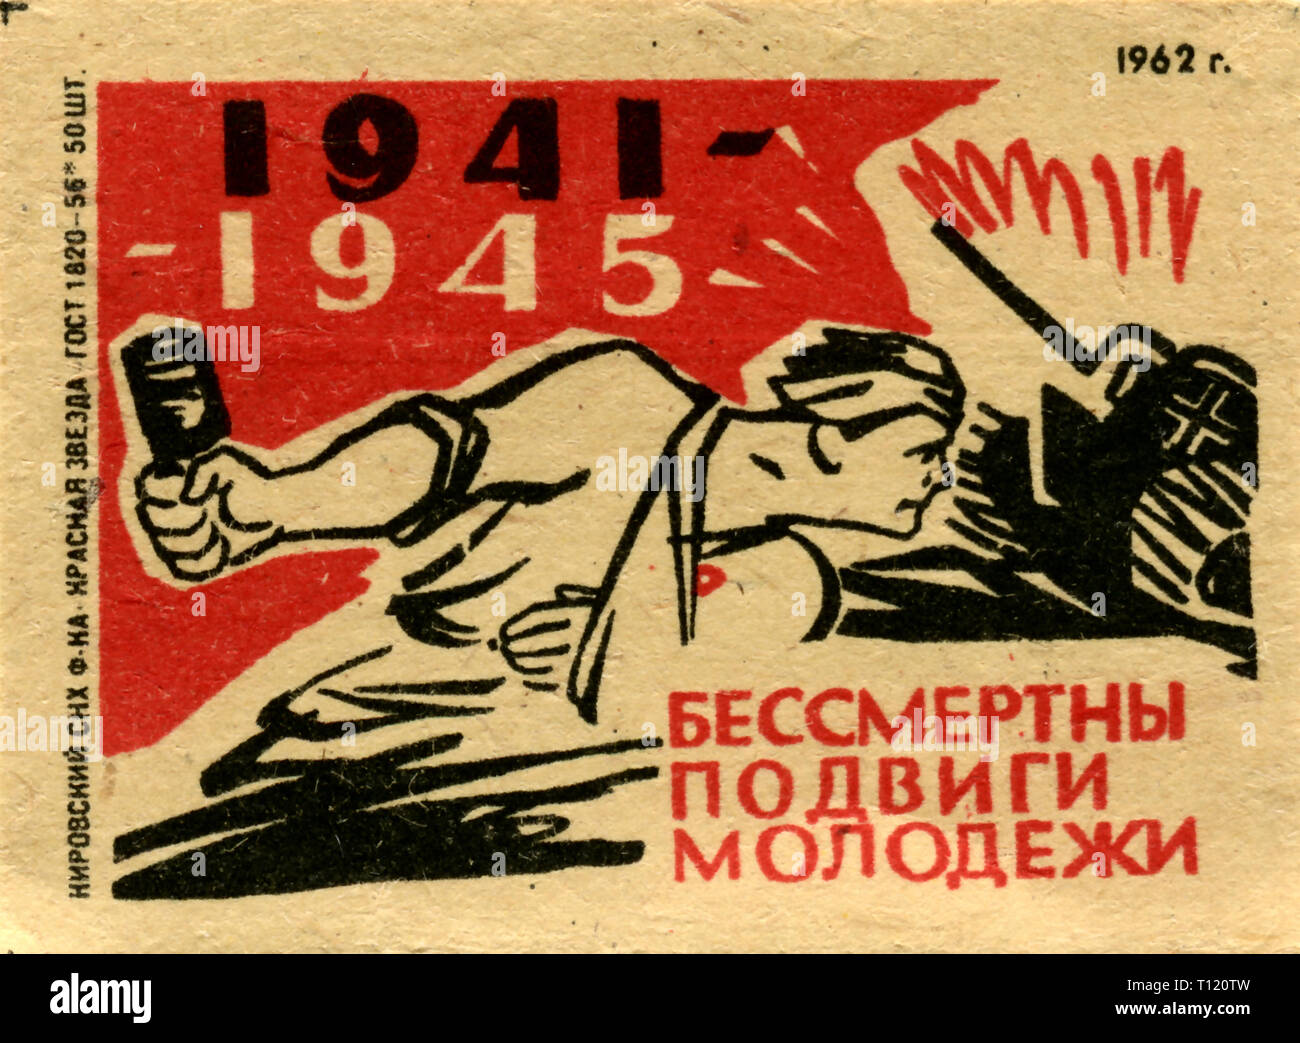 Russia - 1962: Soviet Union propaganda, matchbox graphics, WW2 victory Stock Photo